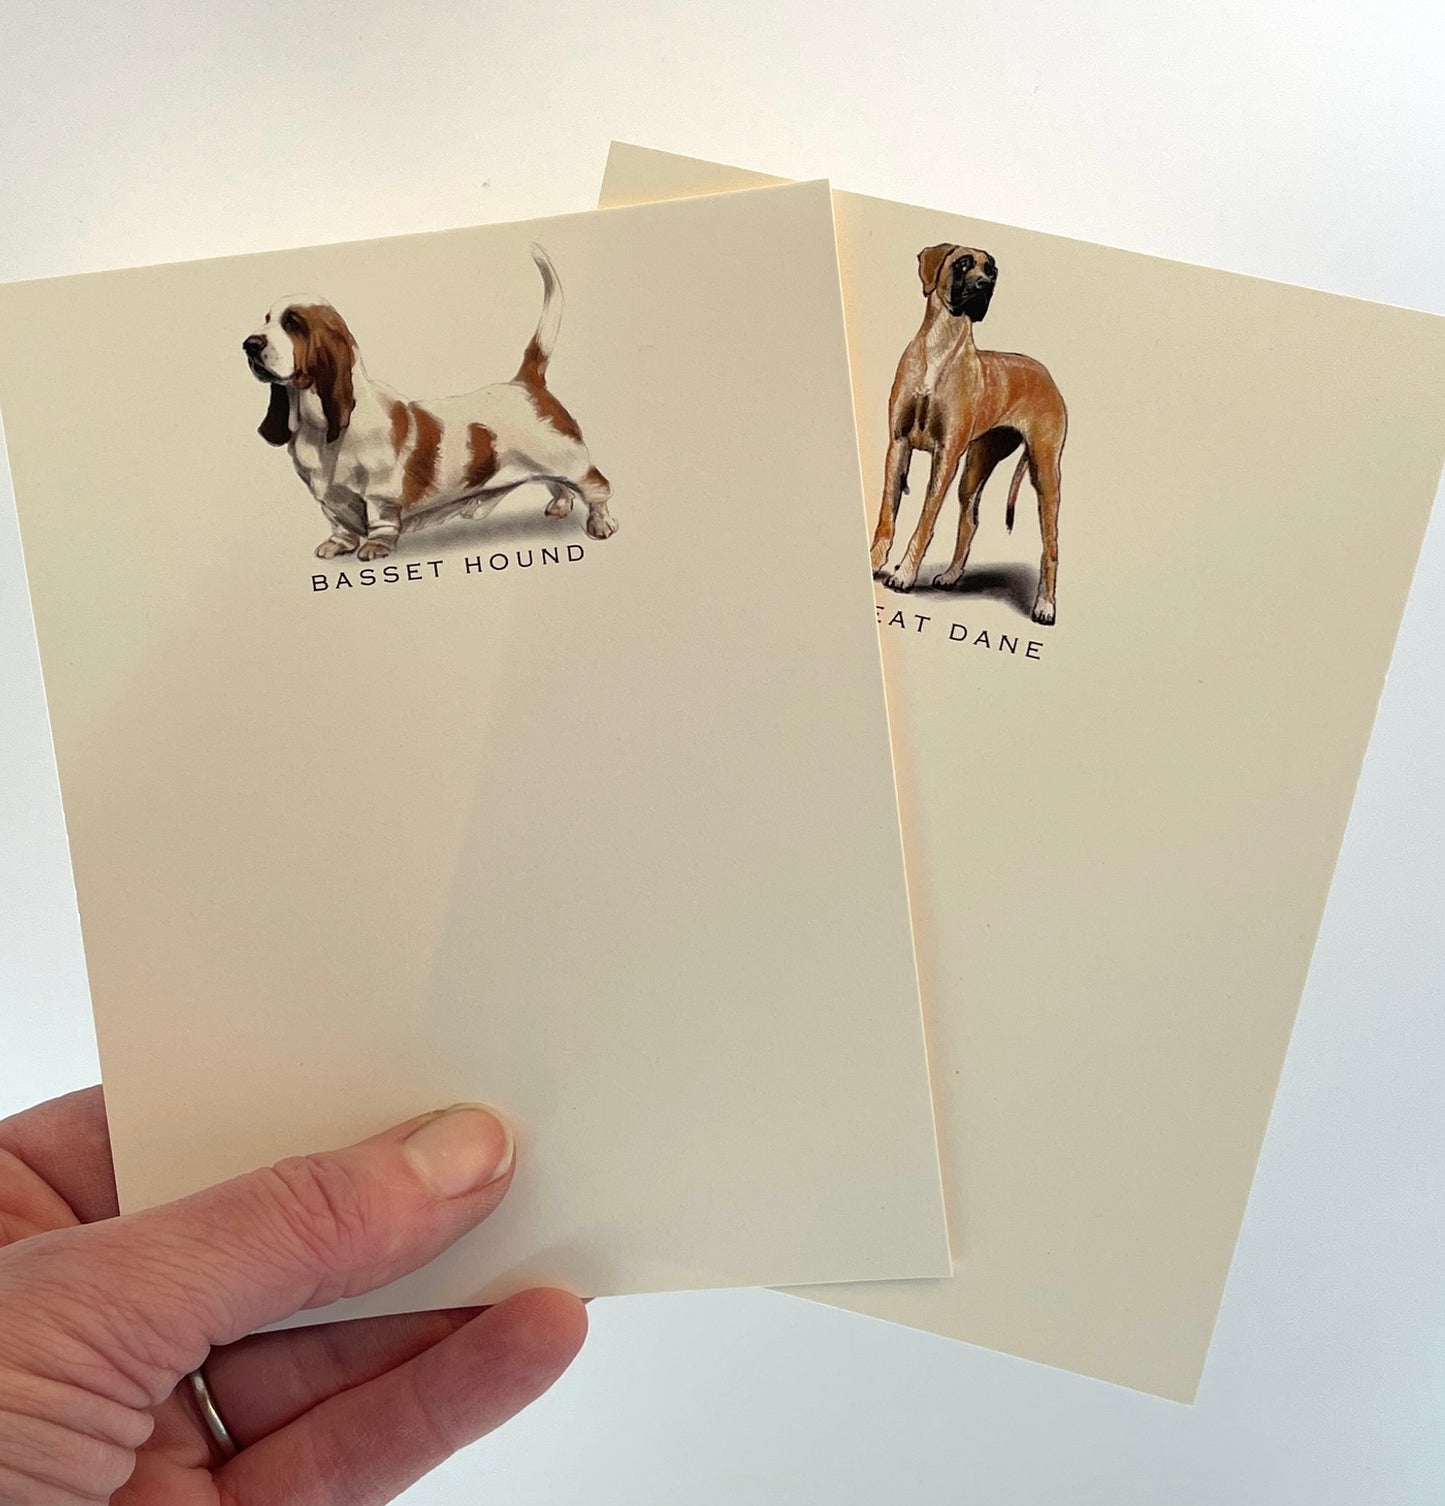 Bernese Mountain Dog Note Cards | Dog Stationery | Custom Dog Note Cards